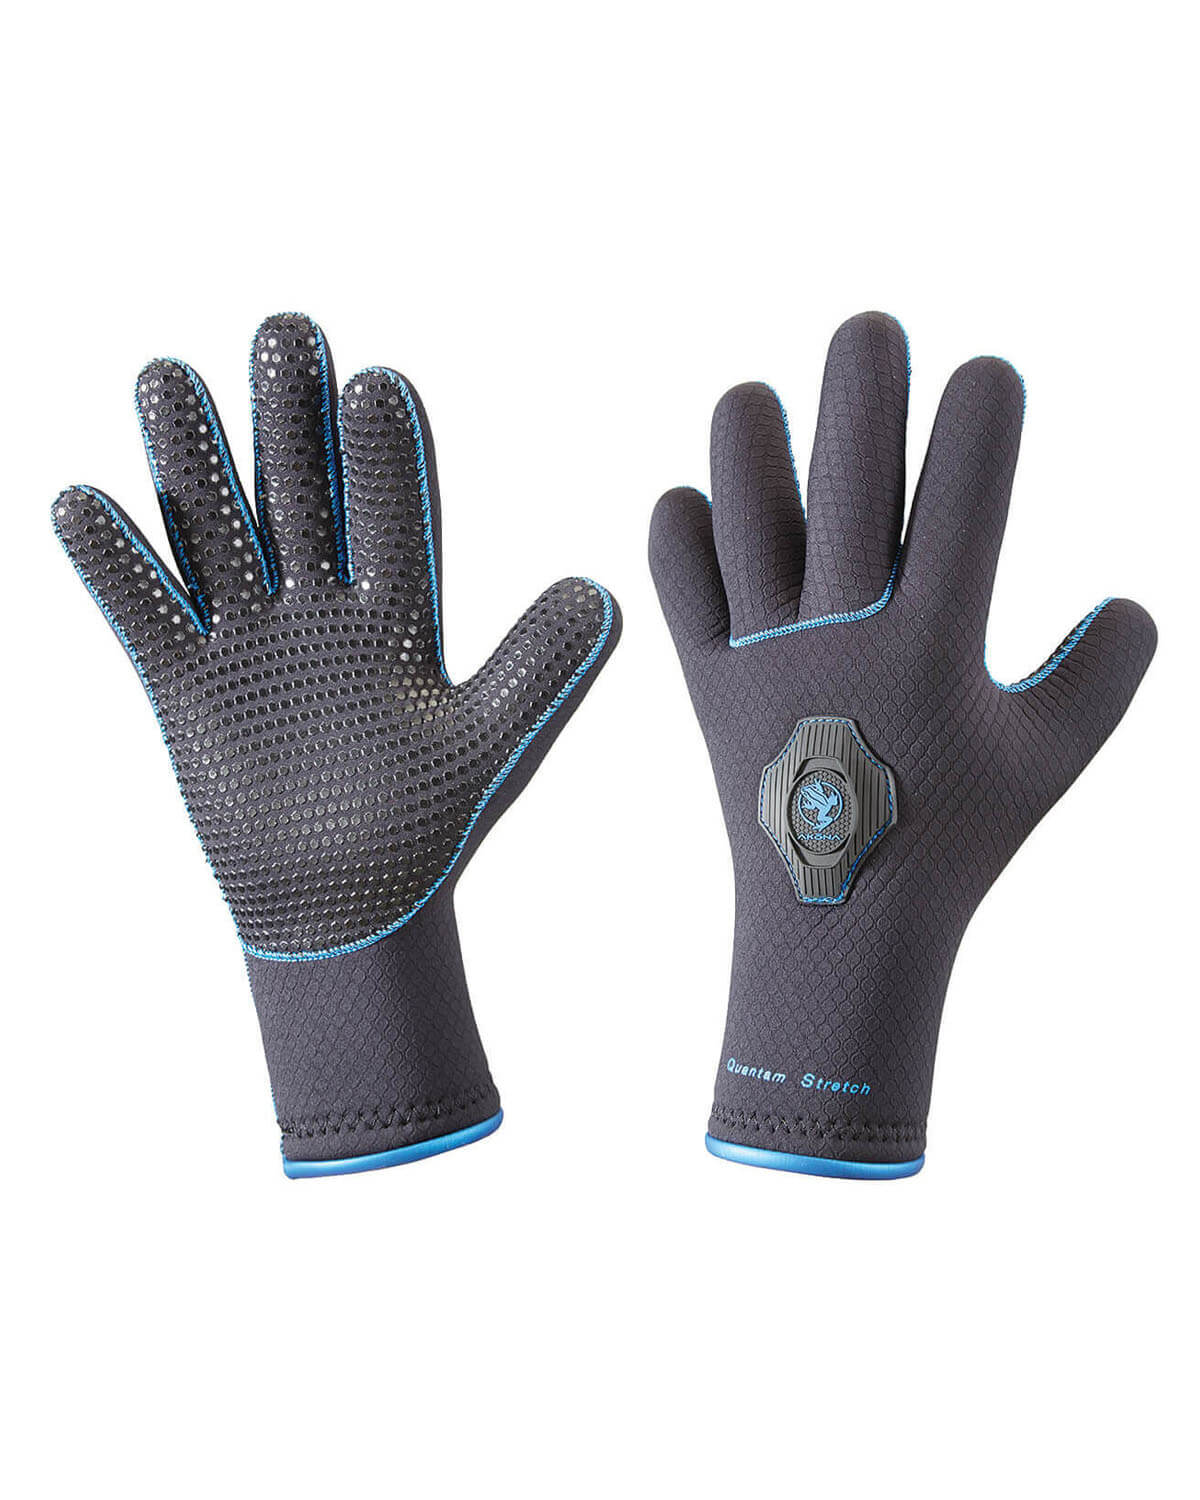 5mm AKONA Quantum Stretch Wetsuit Gloves